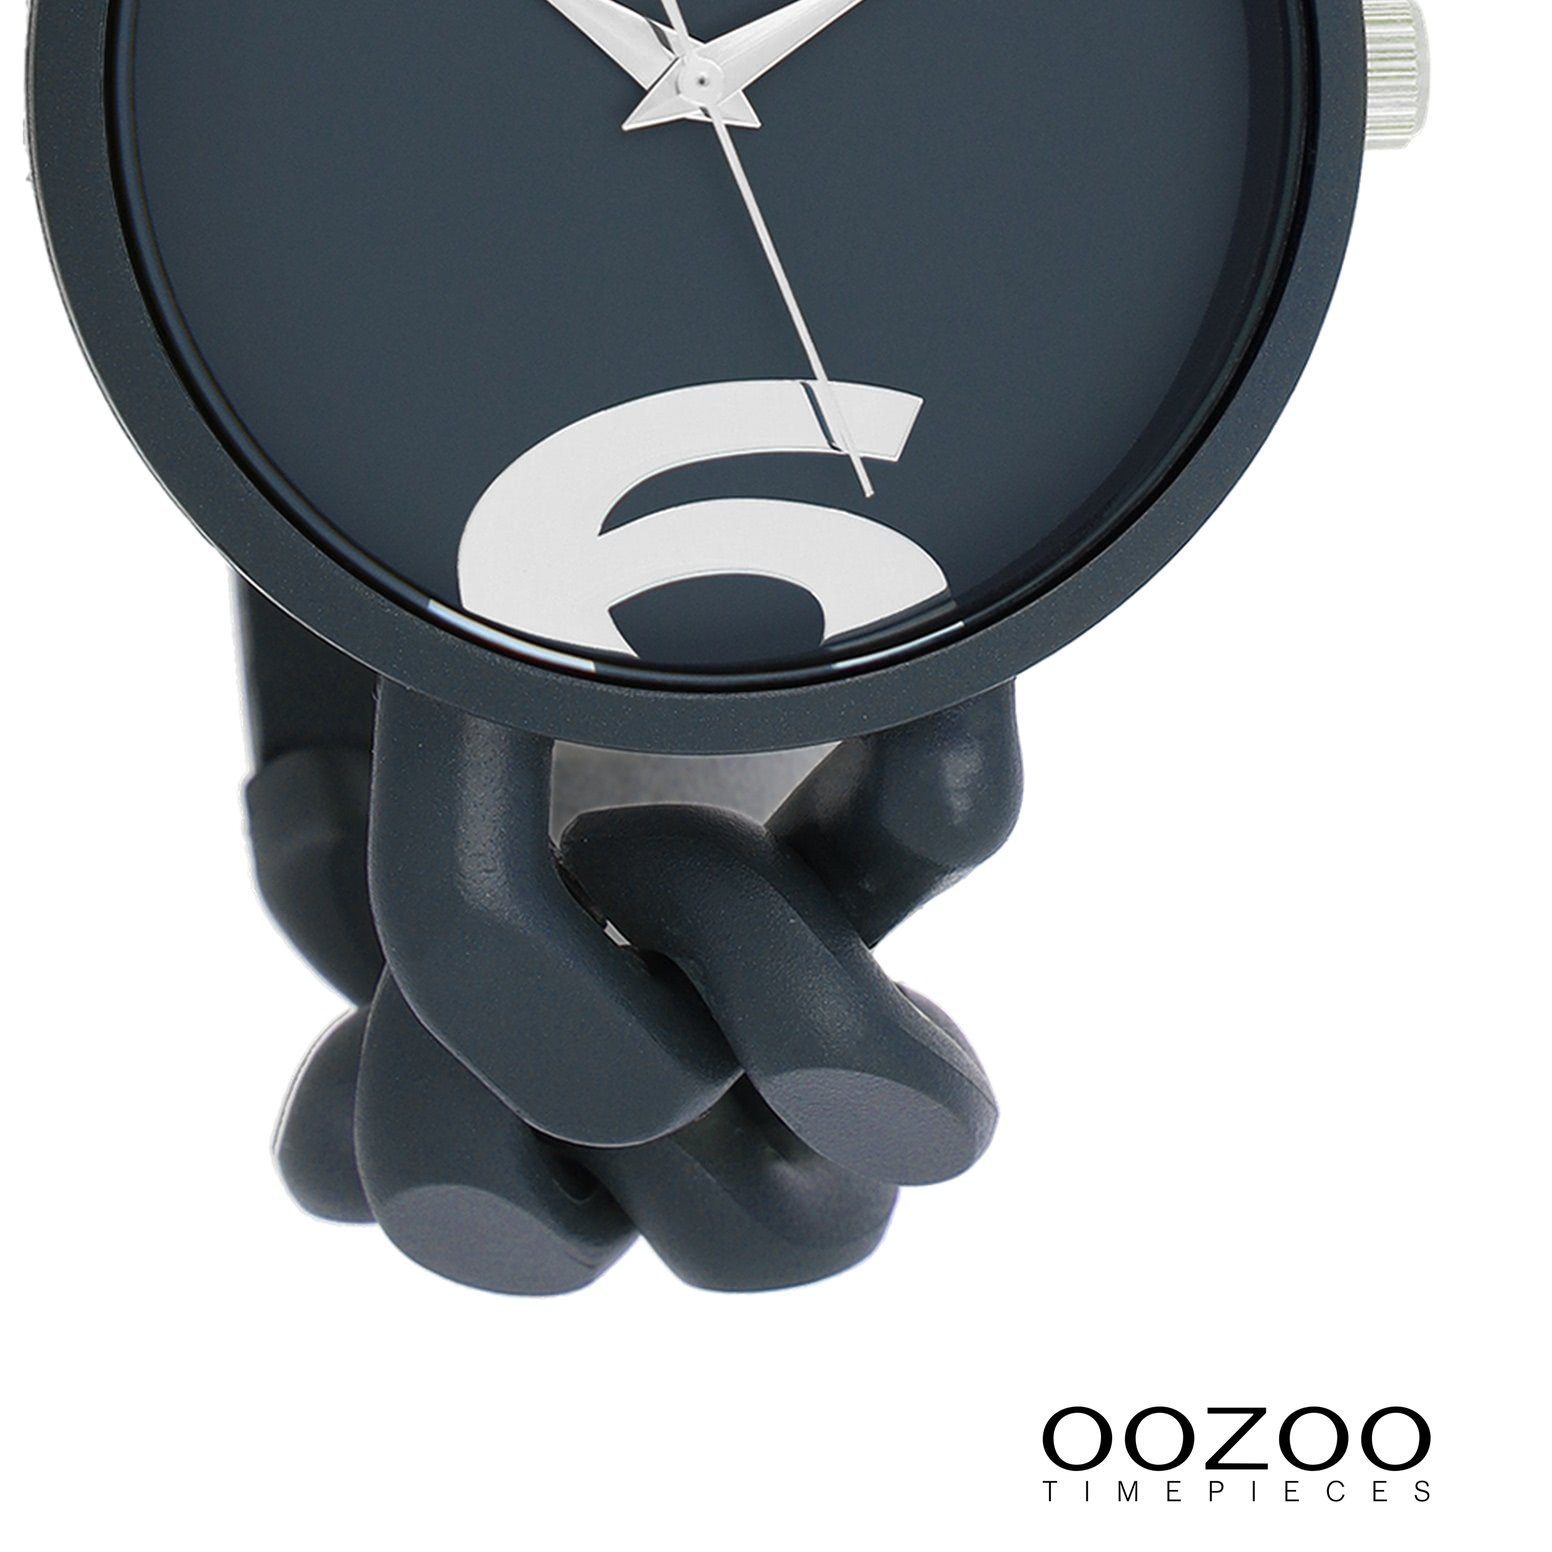 OOZOO Quarzuhr Oozoo Damen Armbanduhr groß Timepieces Analog, Damenuhr rund, (ca. Fashion-Style Kunststoffarmband, 40mm)